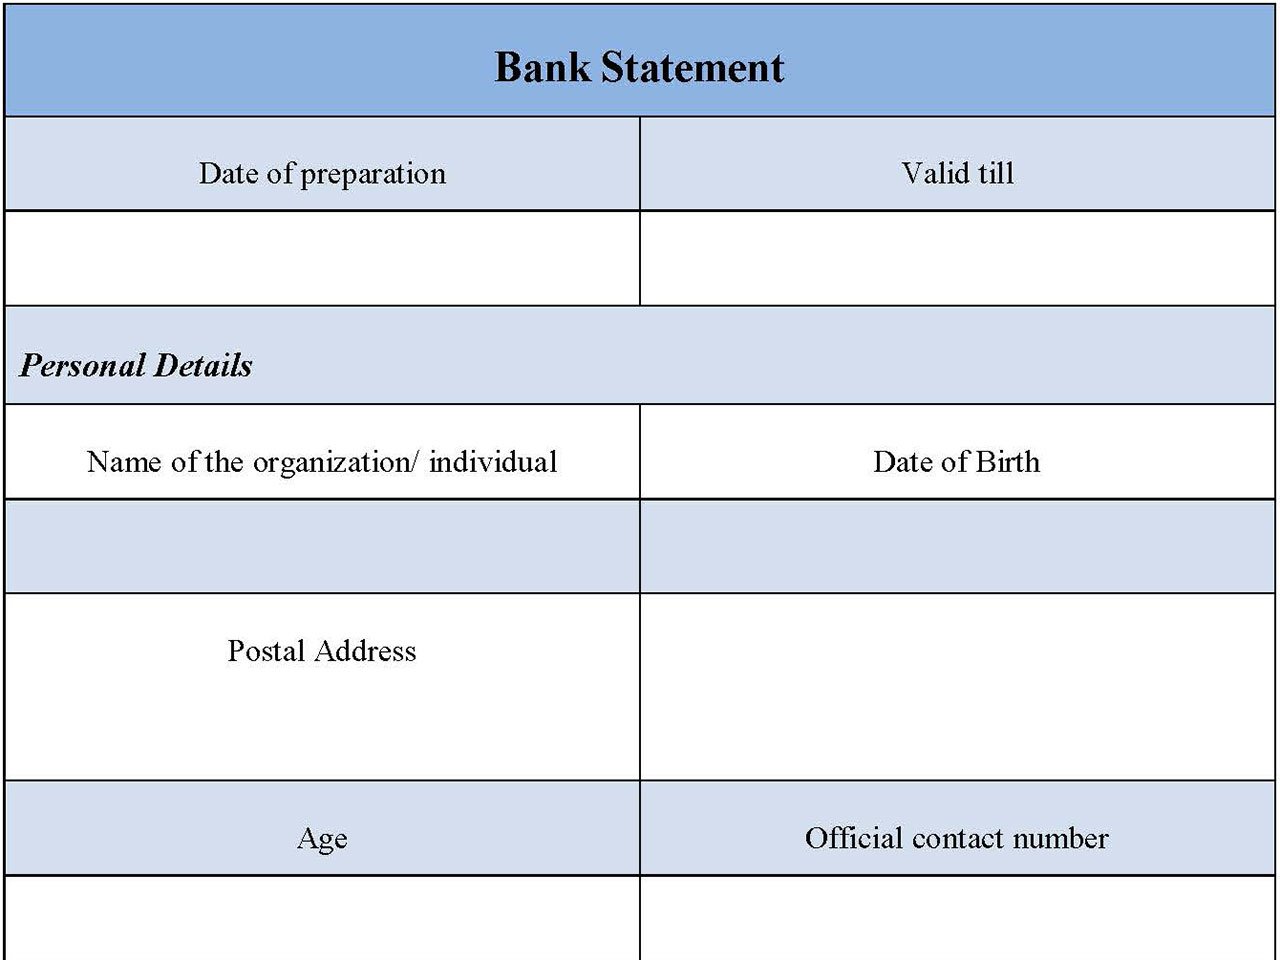 Bank Statement Fillable PDF Form